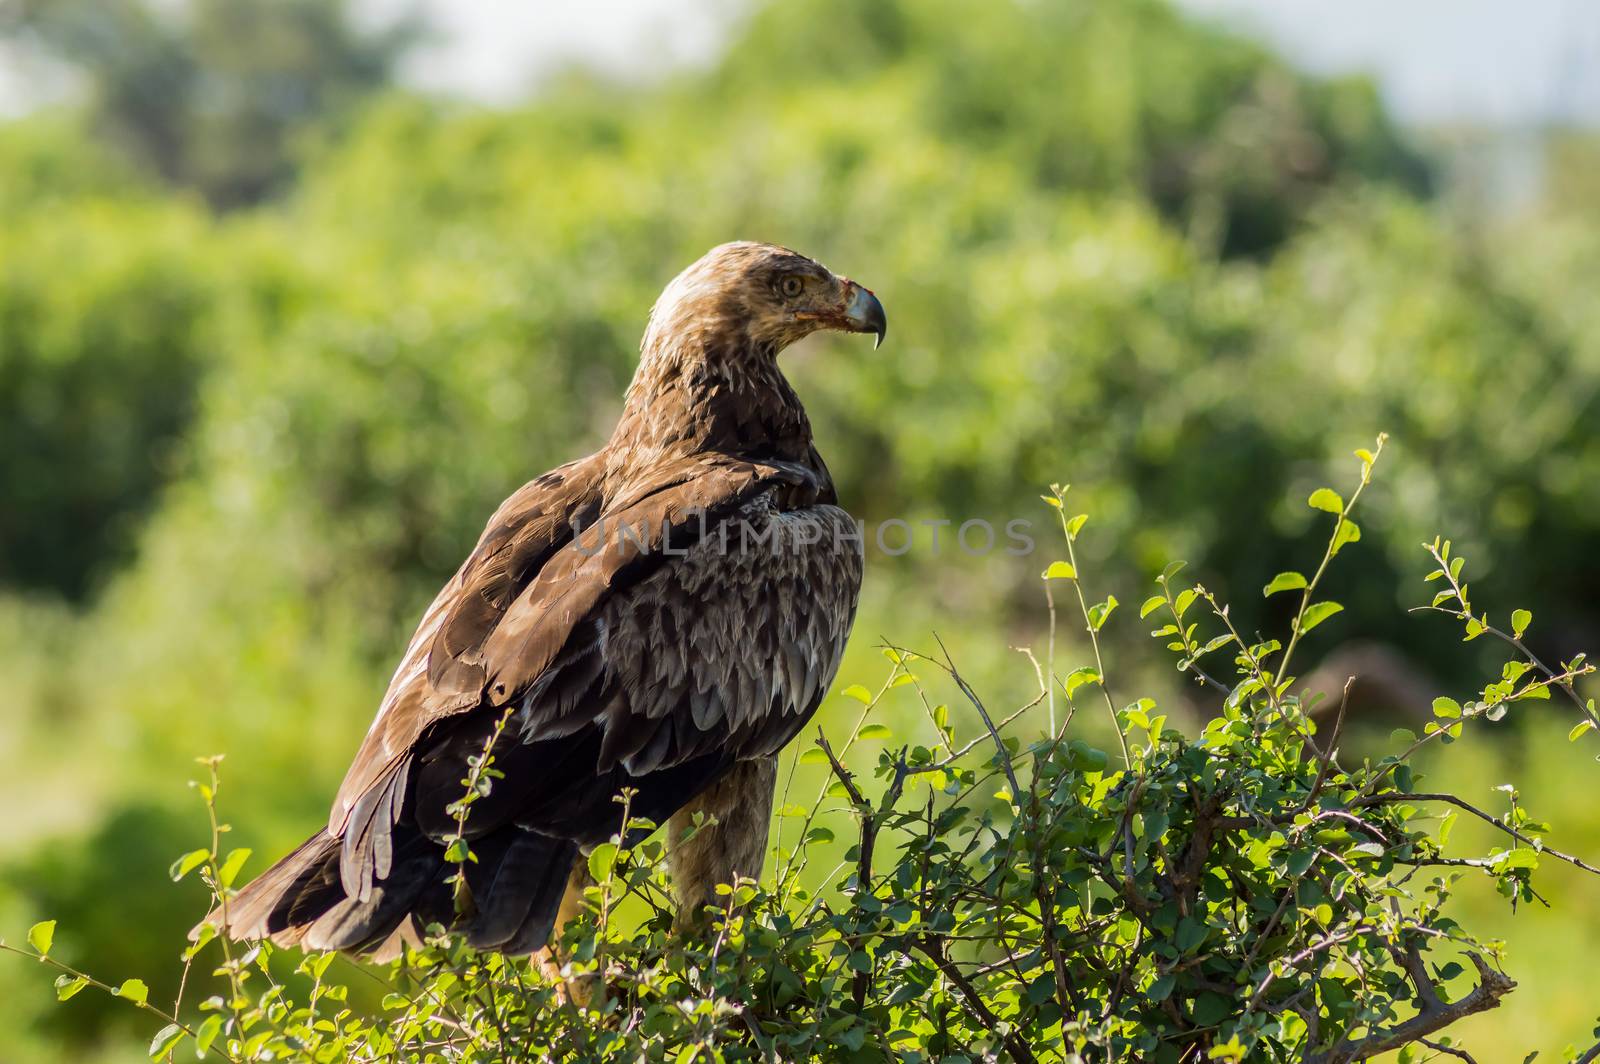 Raven eagle on a tree in samburu park  by Philou1000